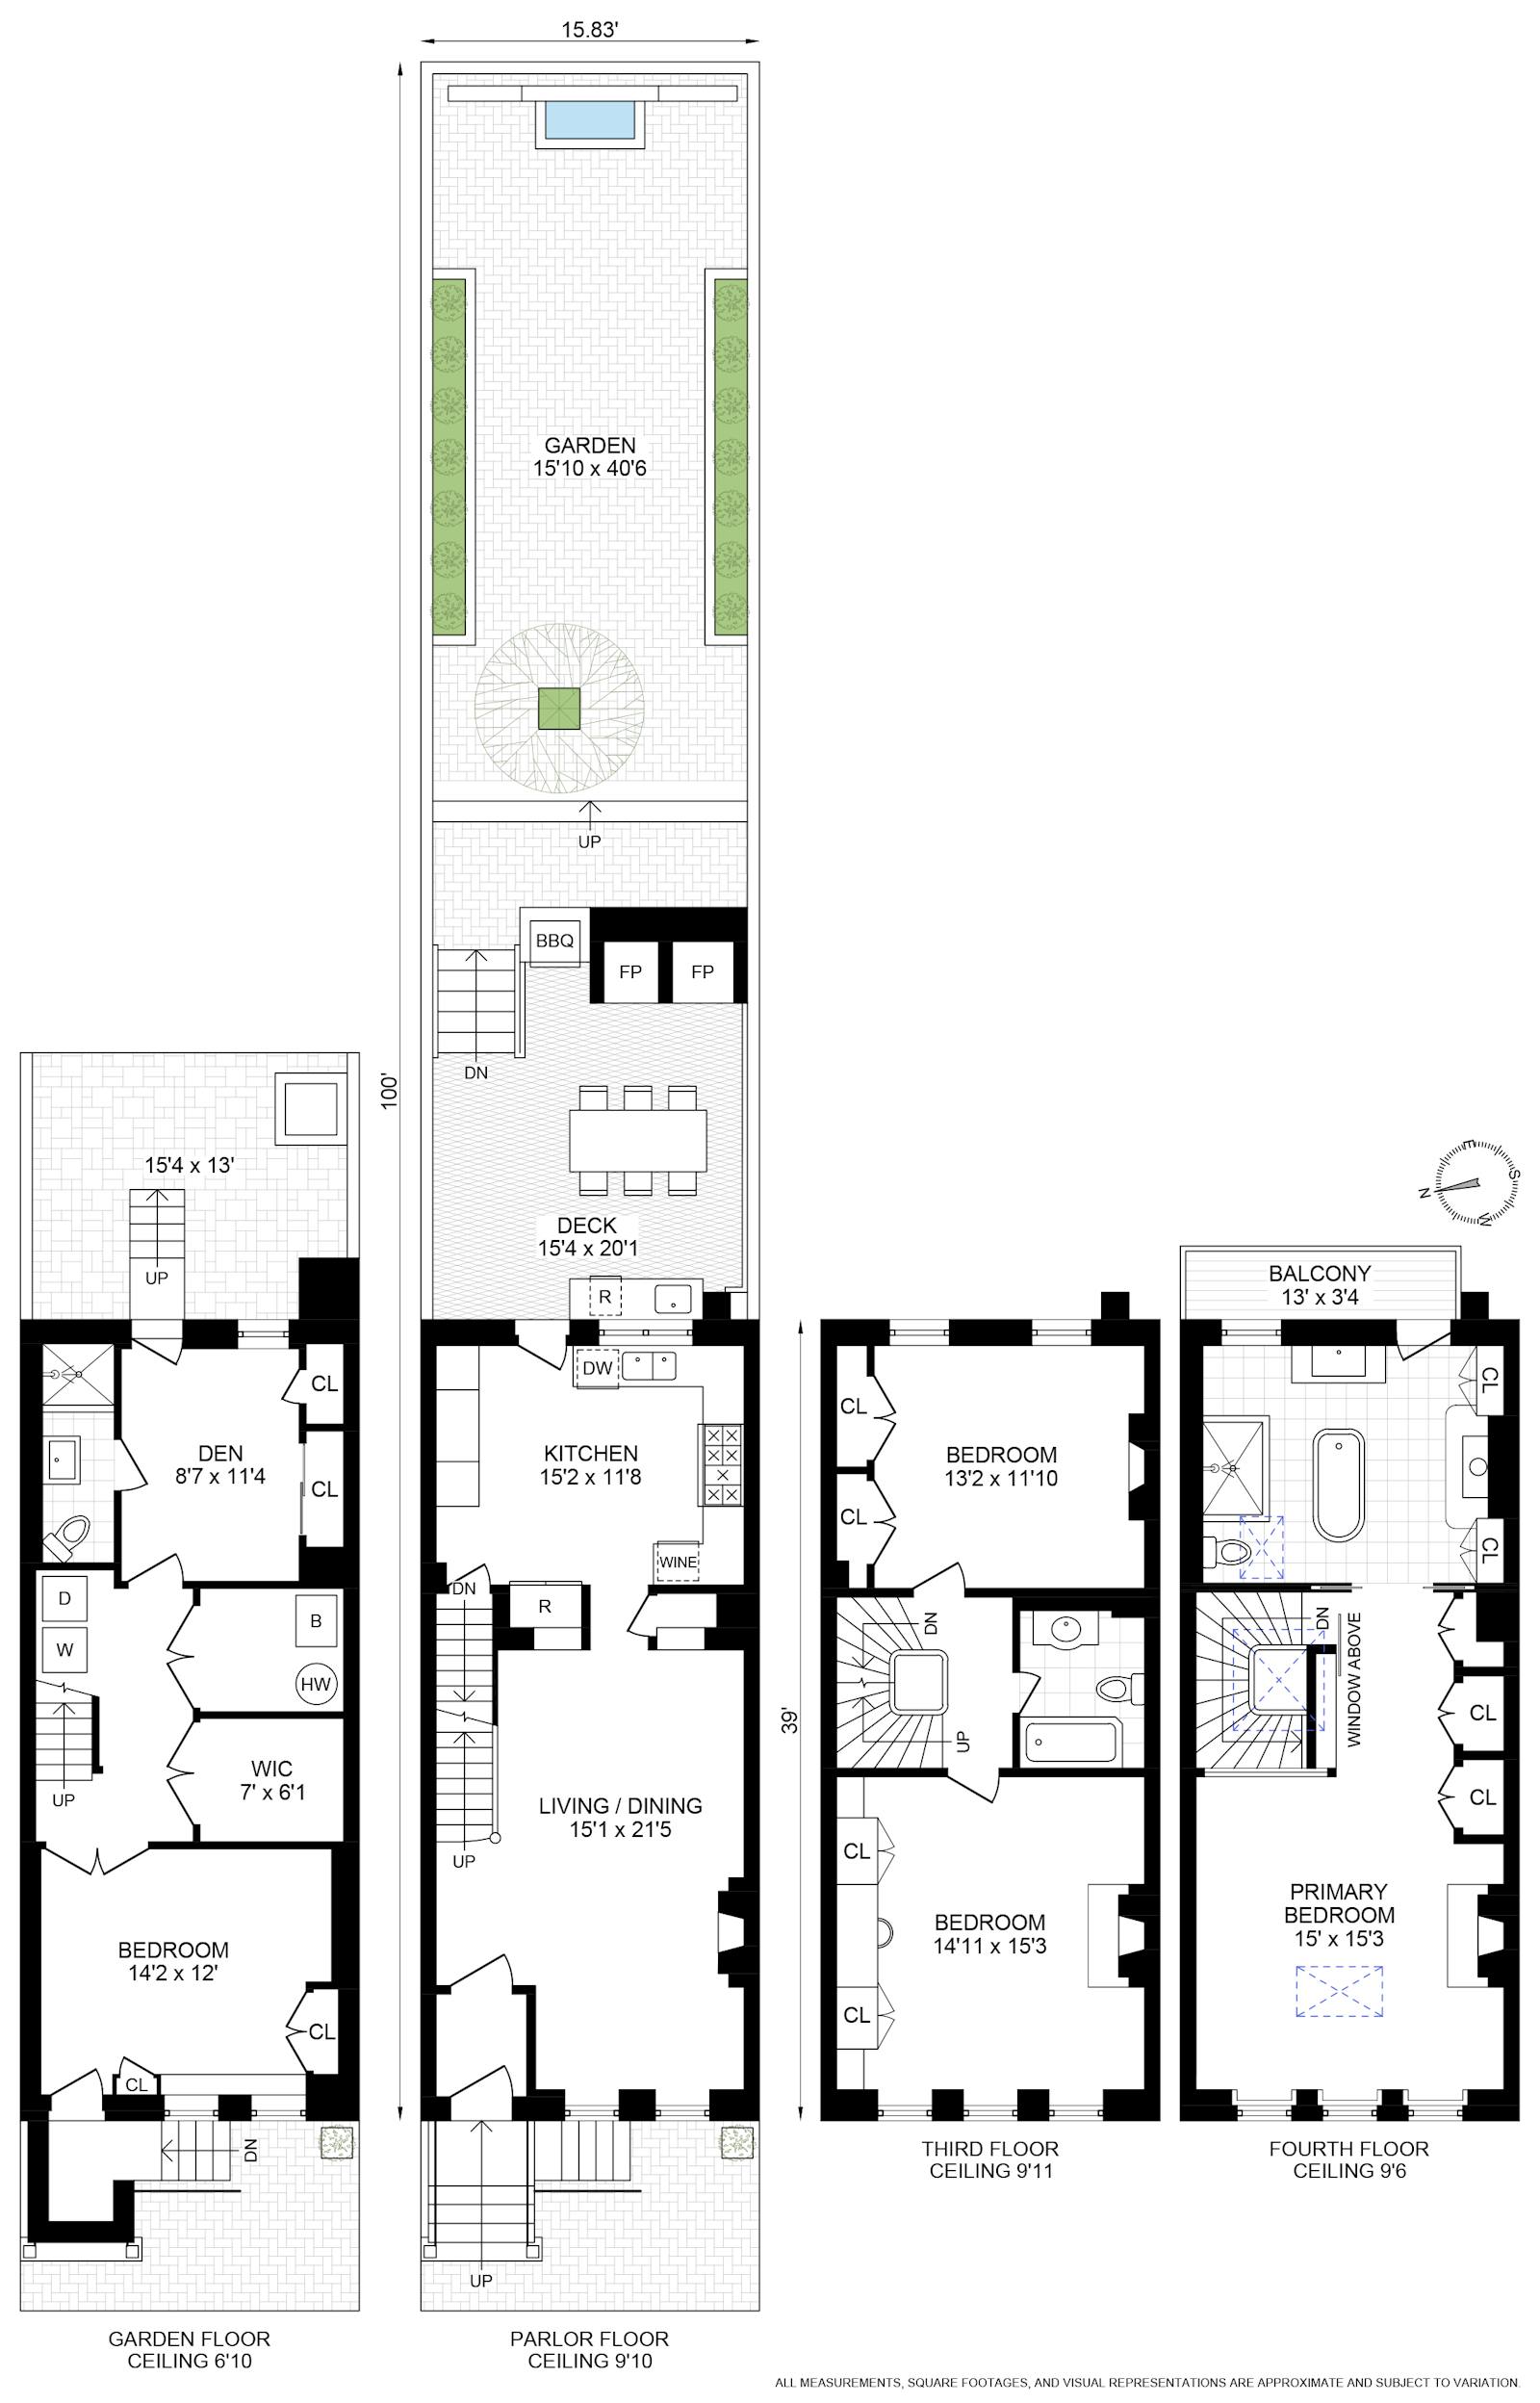 Floorplan for 1215 Park Avenue